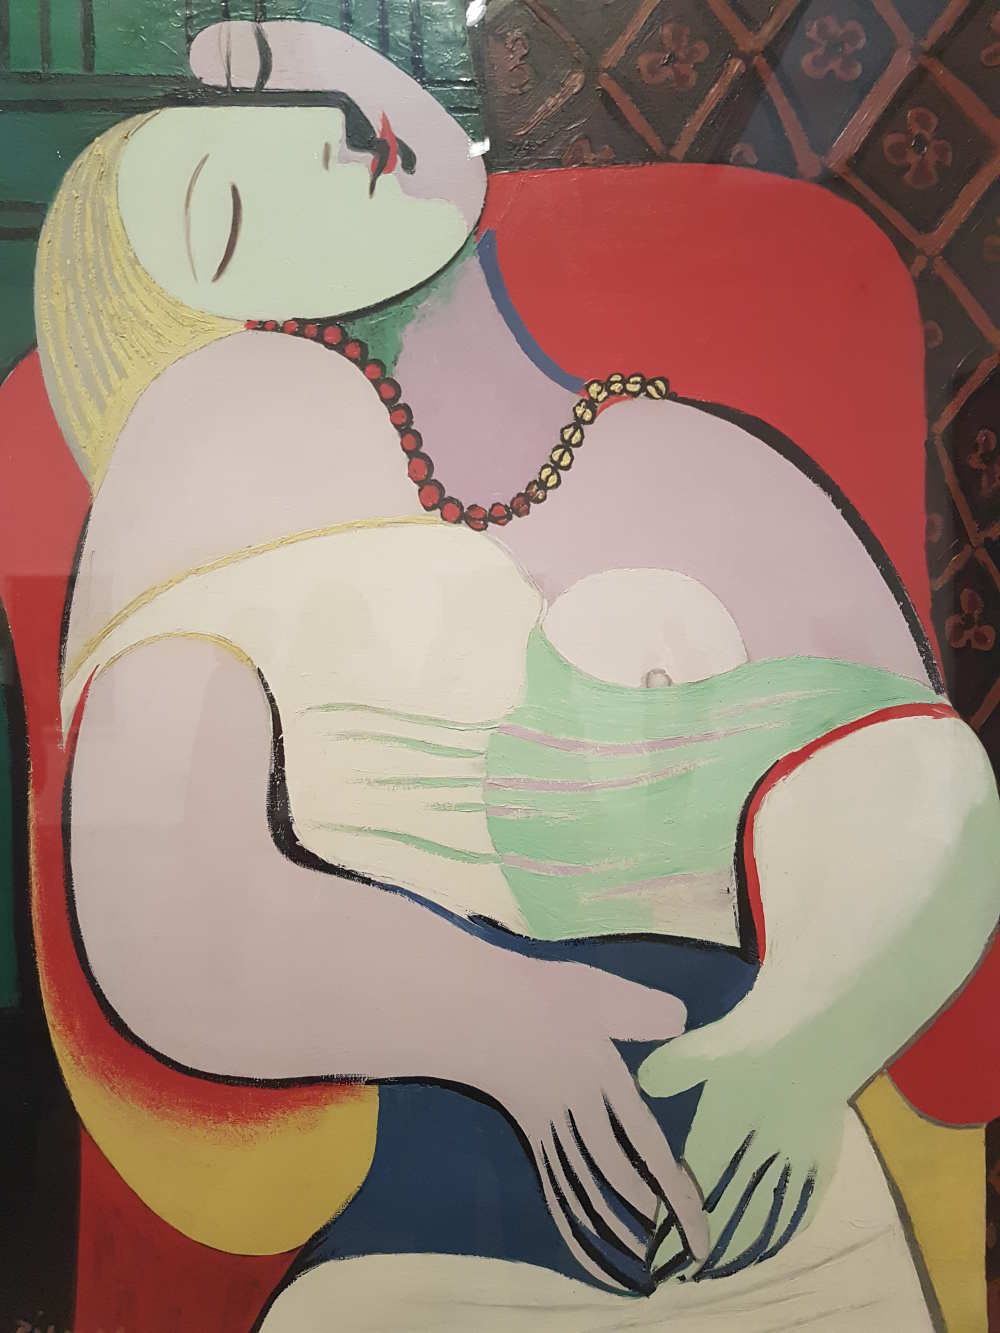 Picasso, Tate Modern, surrealism, Picasso 1932, Le Reve, art exhibition London